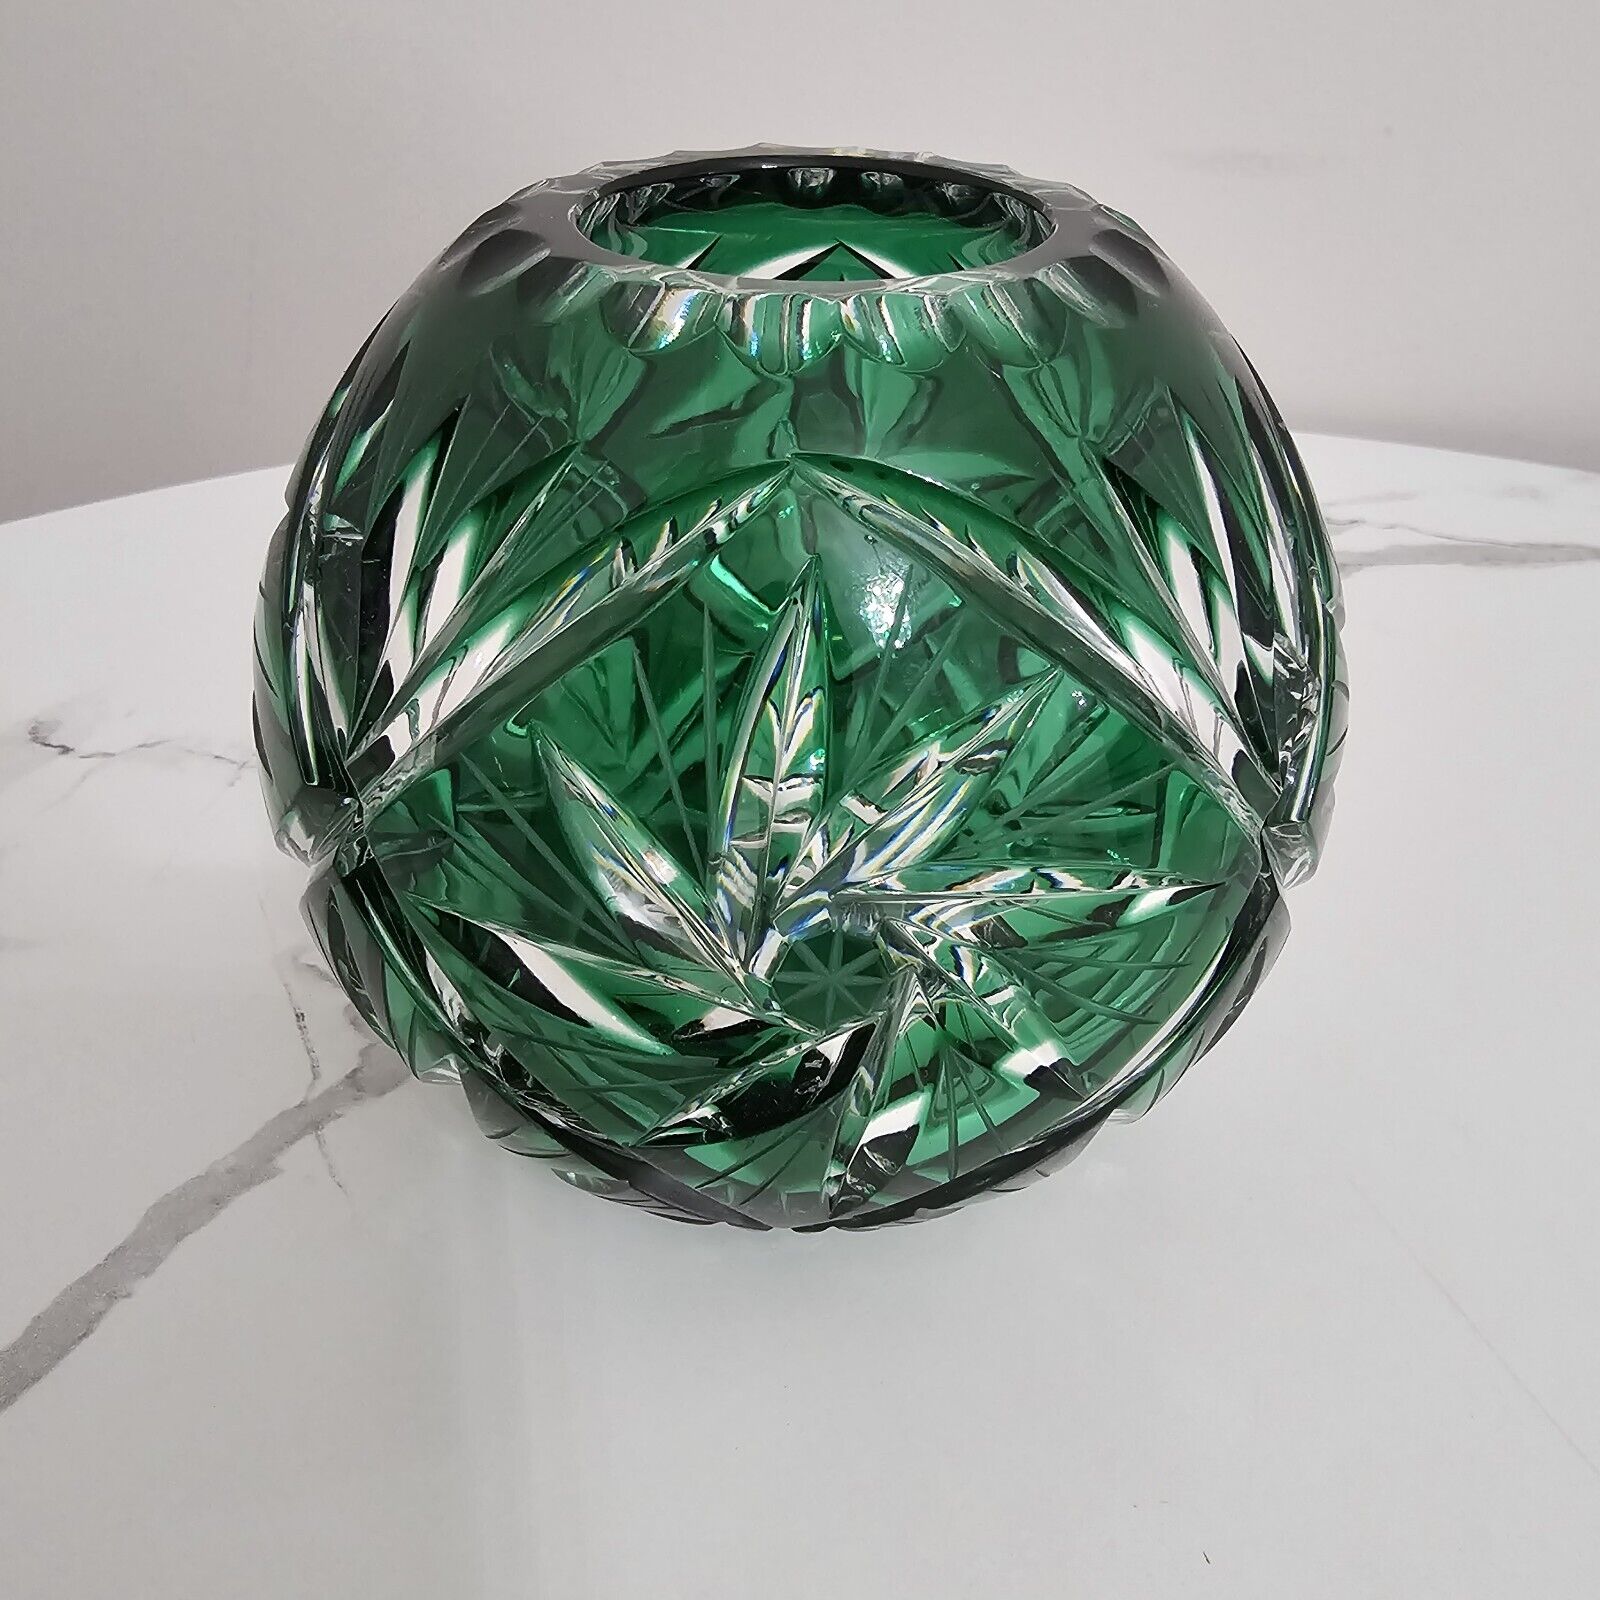 Nachmann Small Crystal Vase With Green Overlay